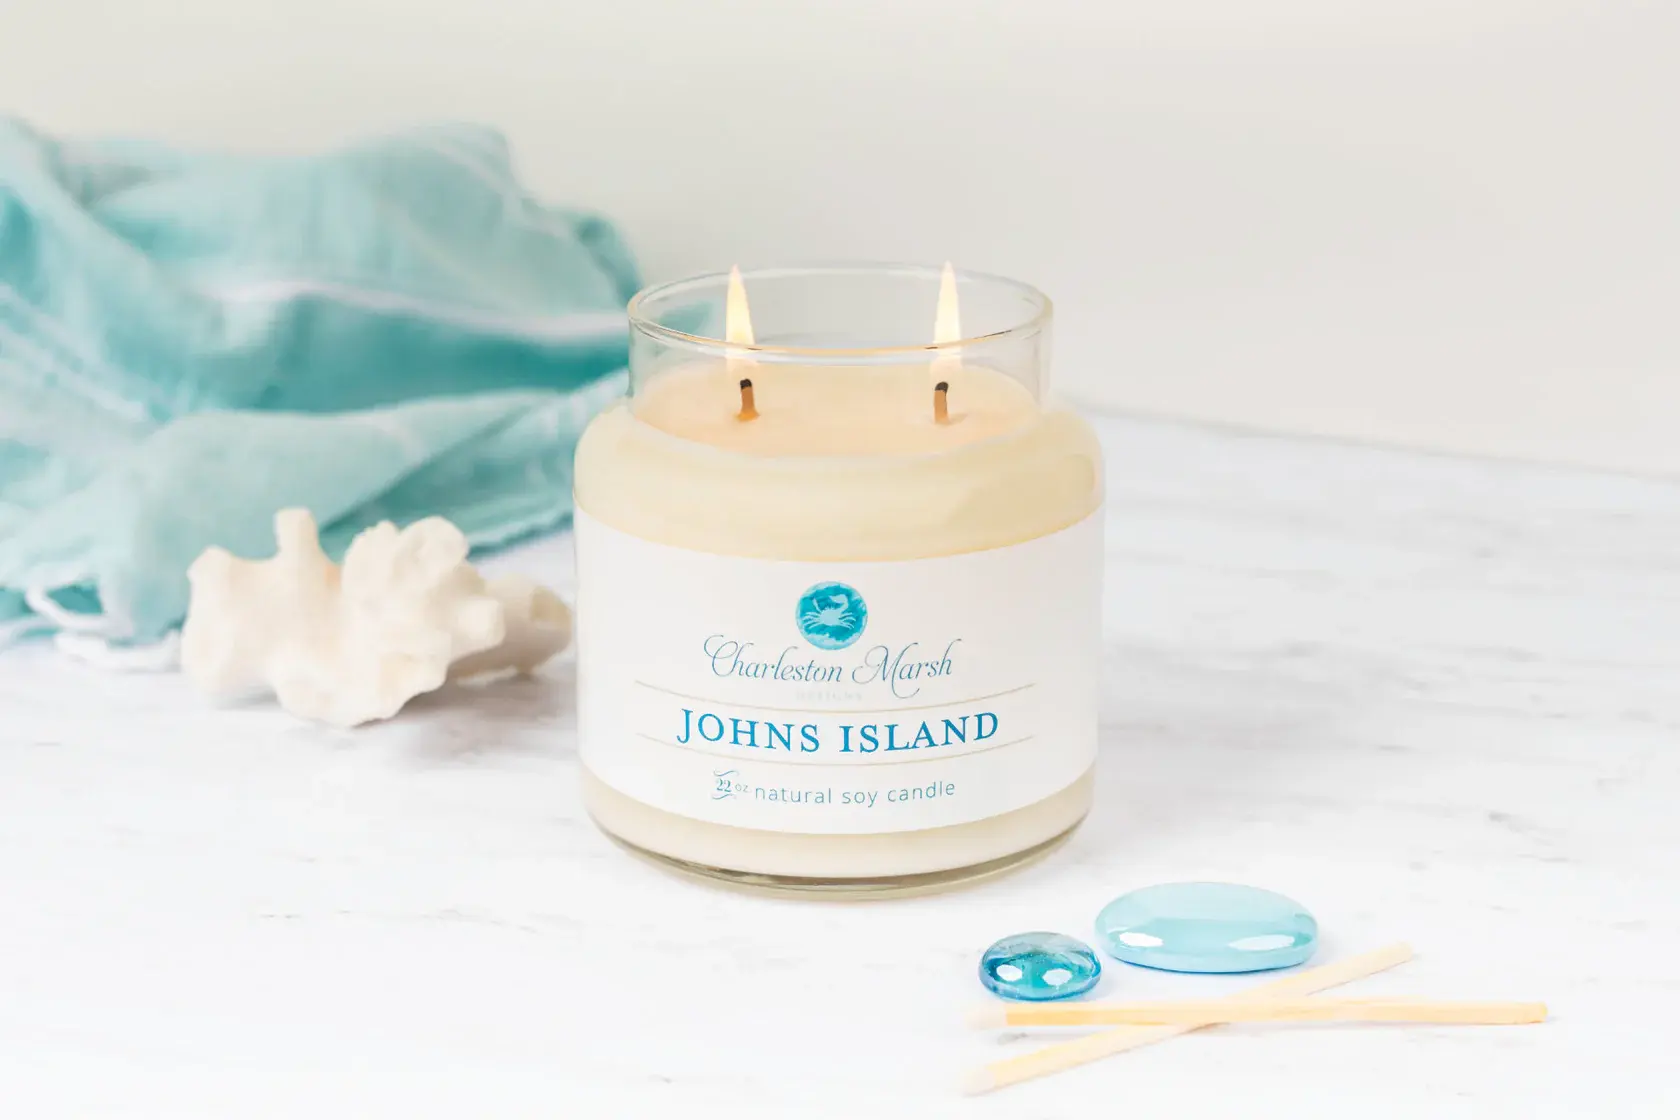 Charleston Marsh Candle - John's Island 15 oz